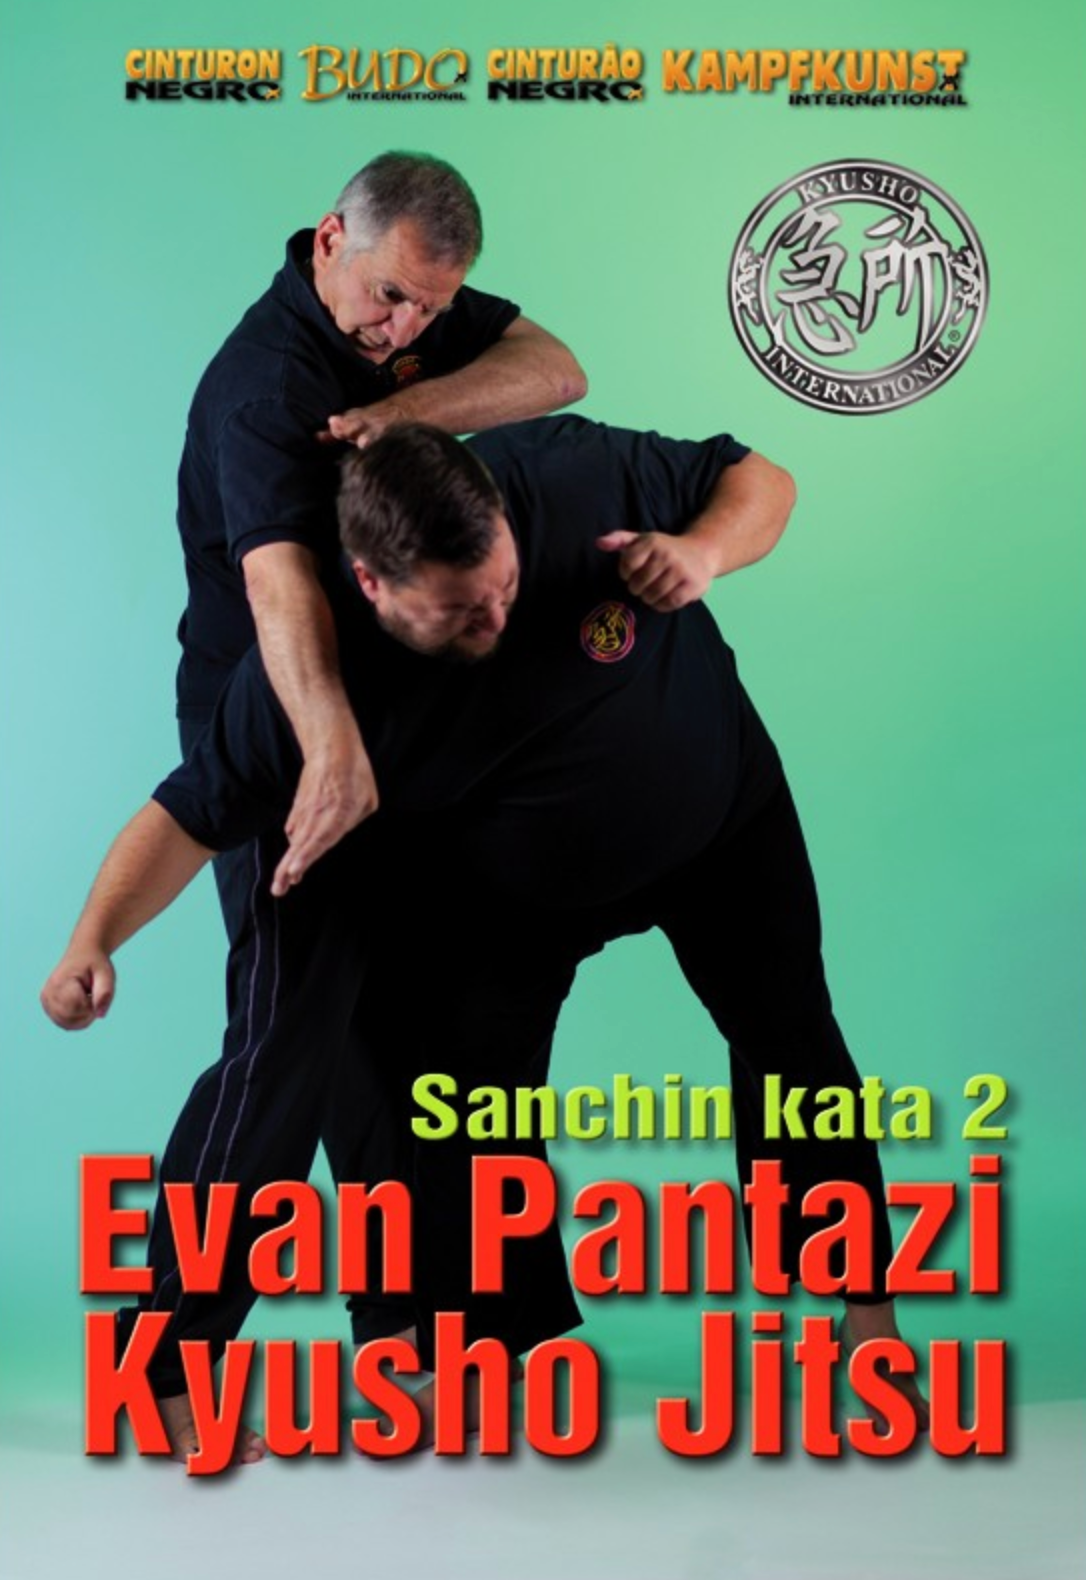 Kyusho Sanchin Kata Vol 2 DVD by Evan Pantazi - Budovideos Inc